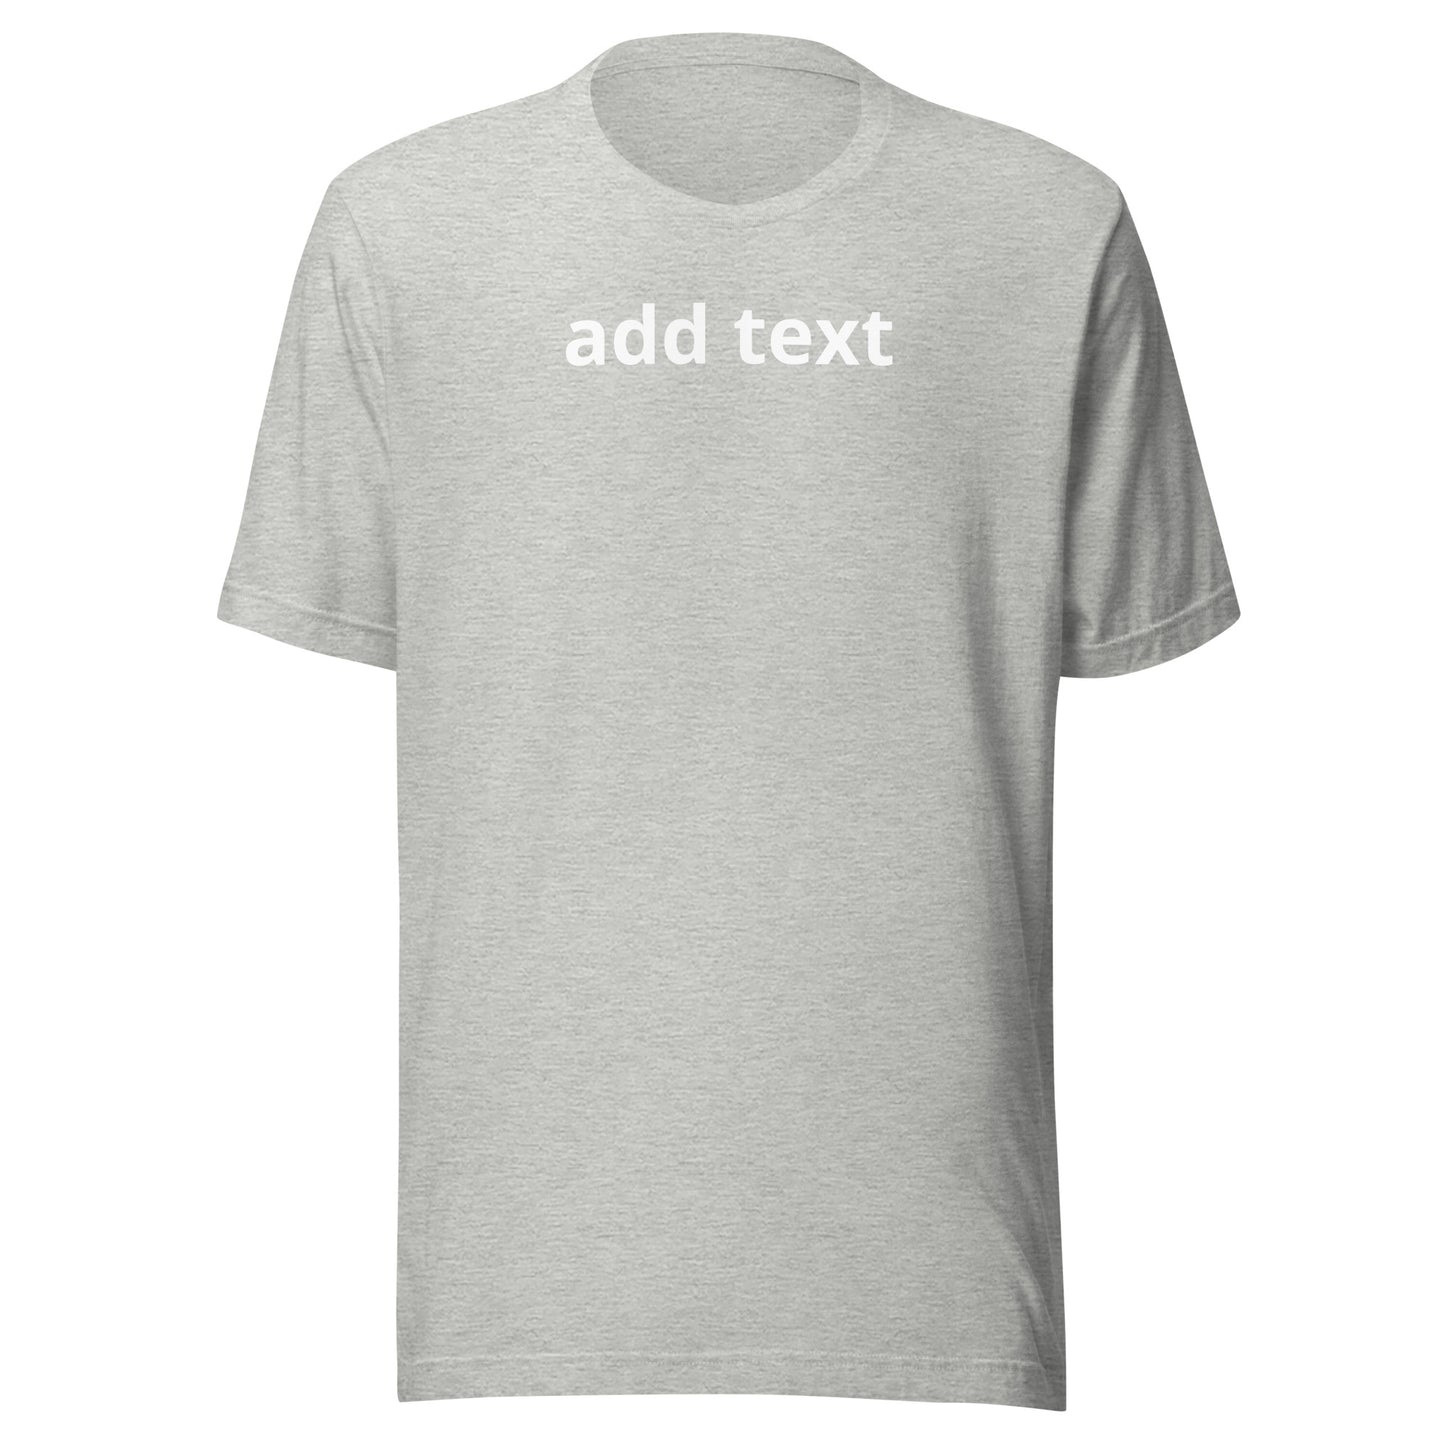 Small - Medium Unisex [front & back white text]